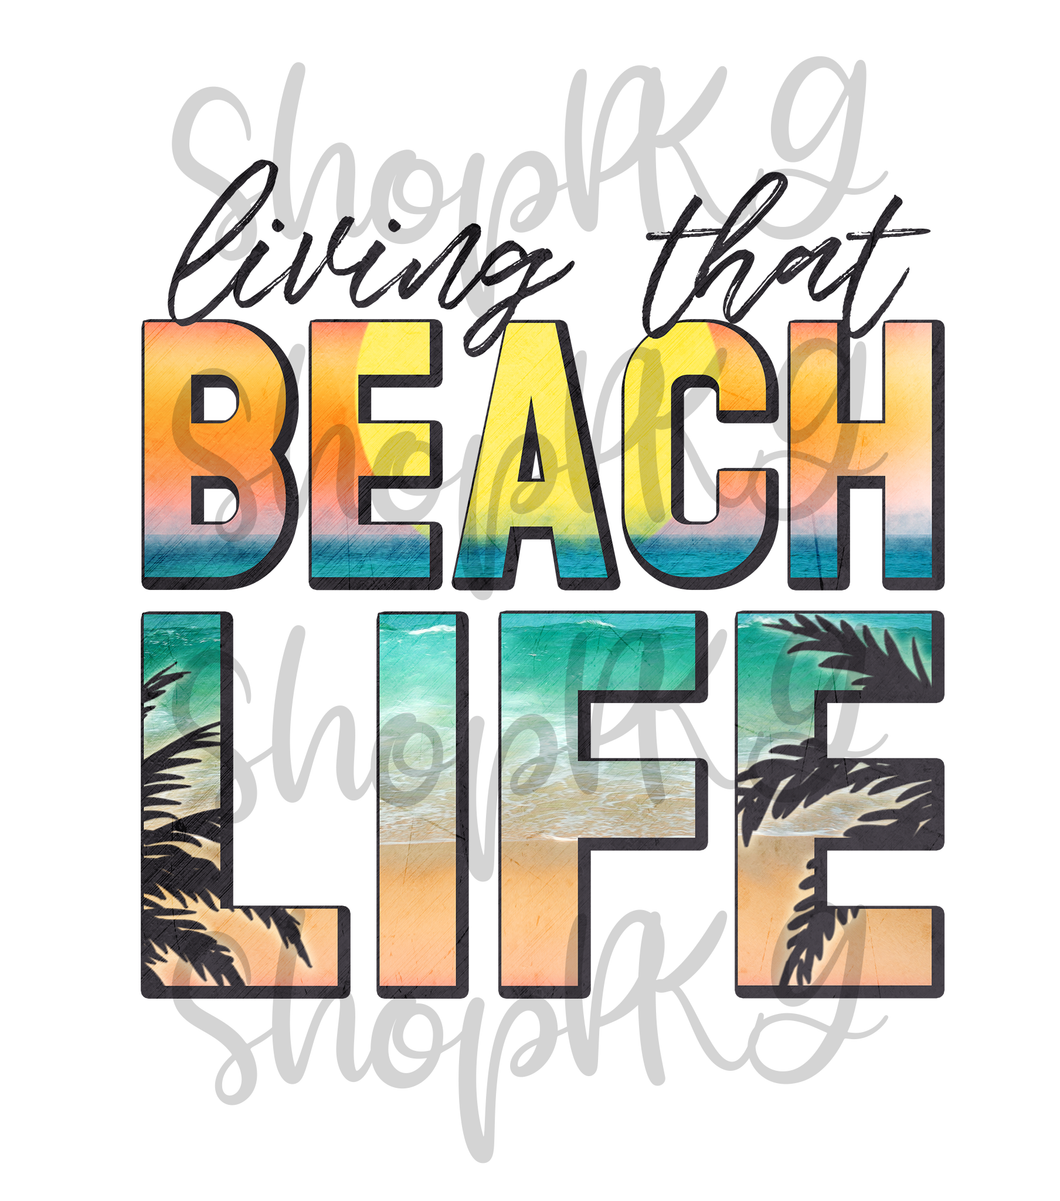 Living That Beach Life